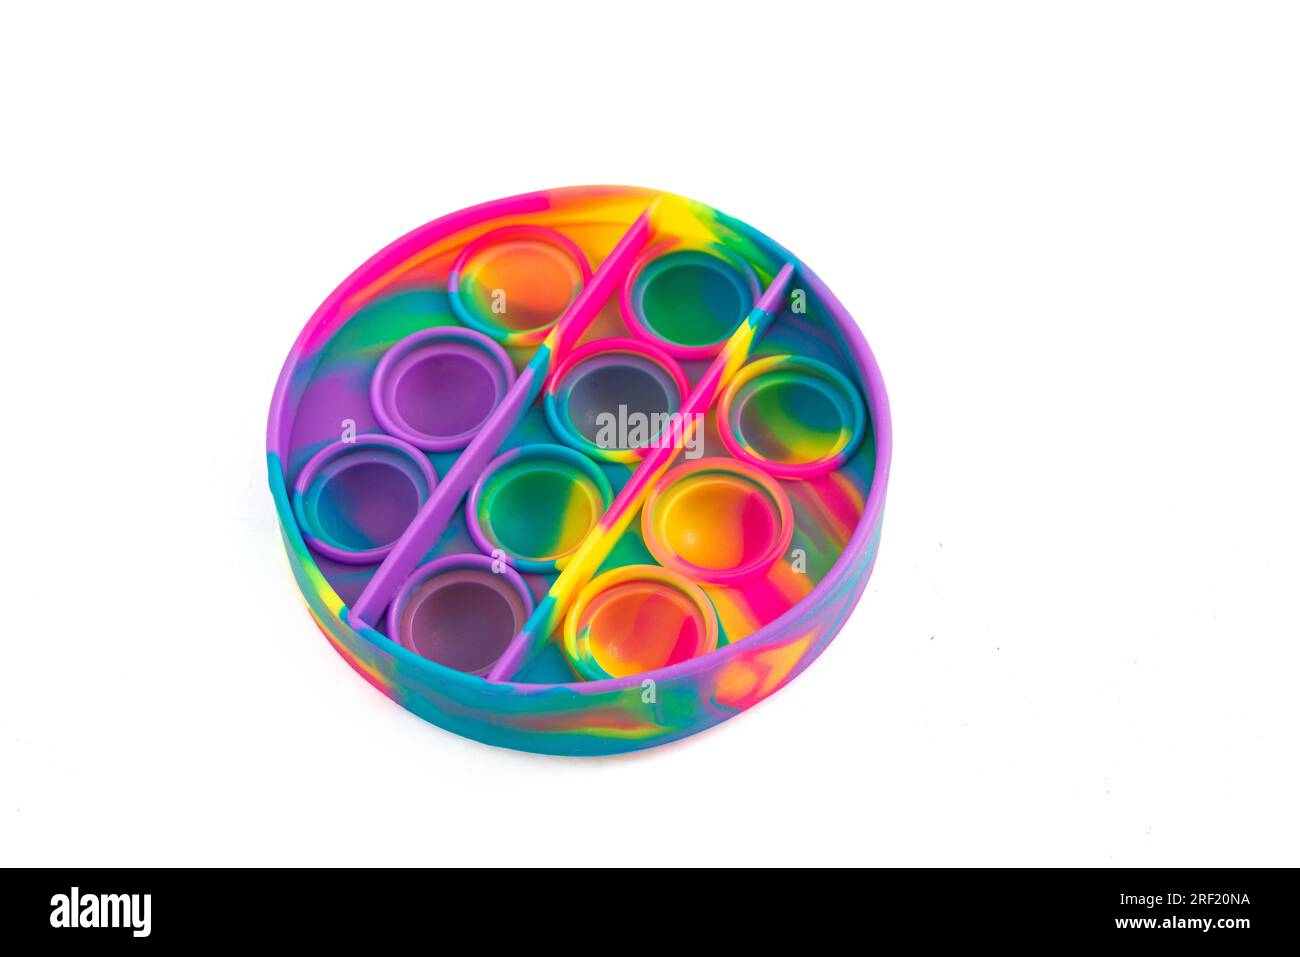 Multi-colored popular silicone anti-stress toy pop it. Colorful anti stress sensory toy fidget push pop it. Stock Photo